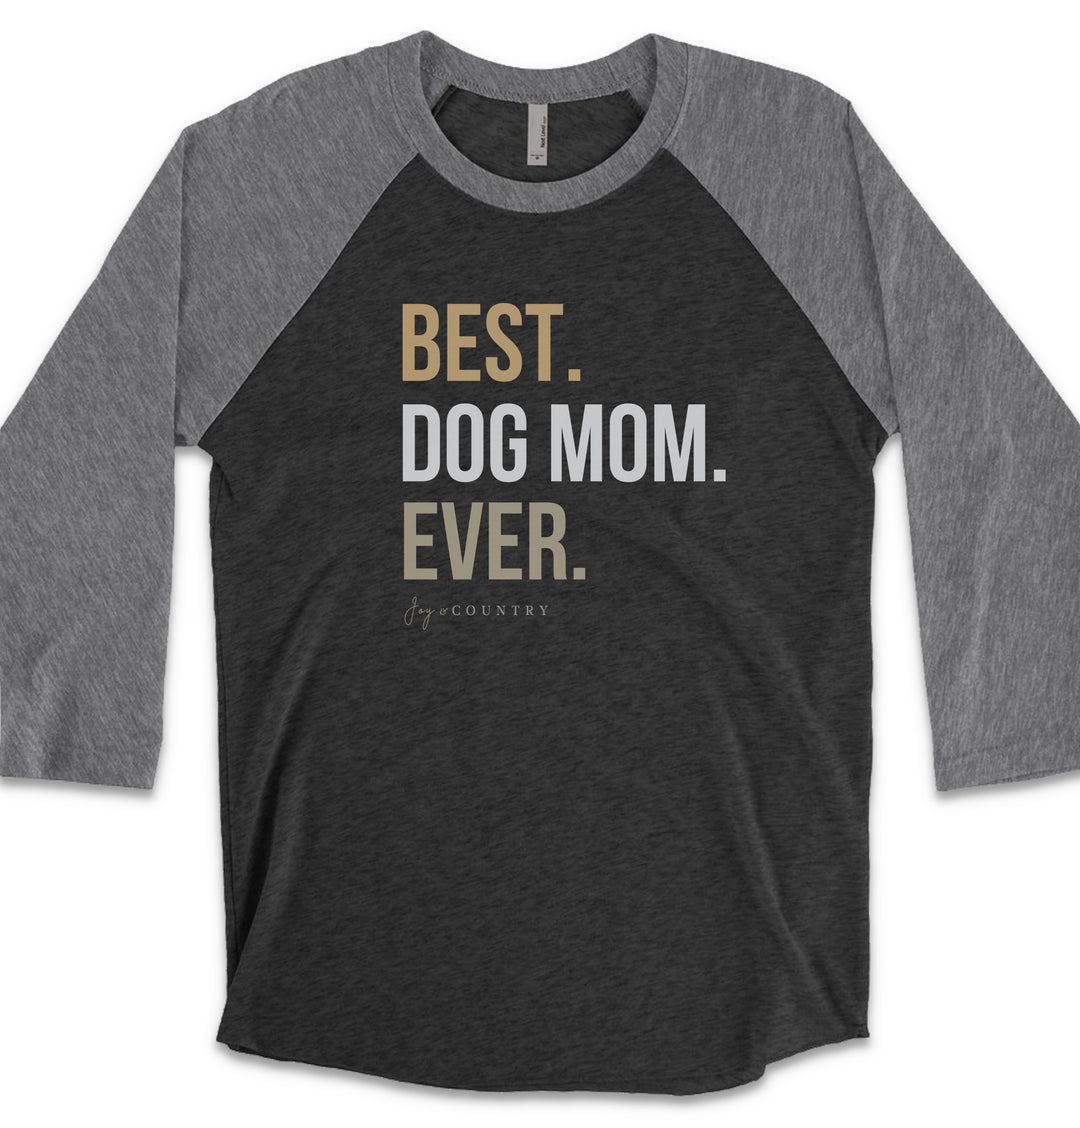 Best Dog Mom Ever - Unisex Tri-Blend 3/4 Sleeve Raglan Tee